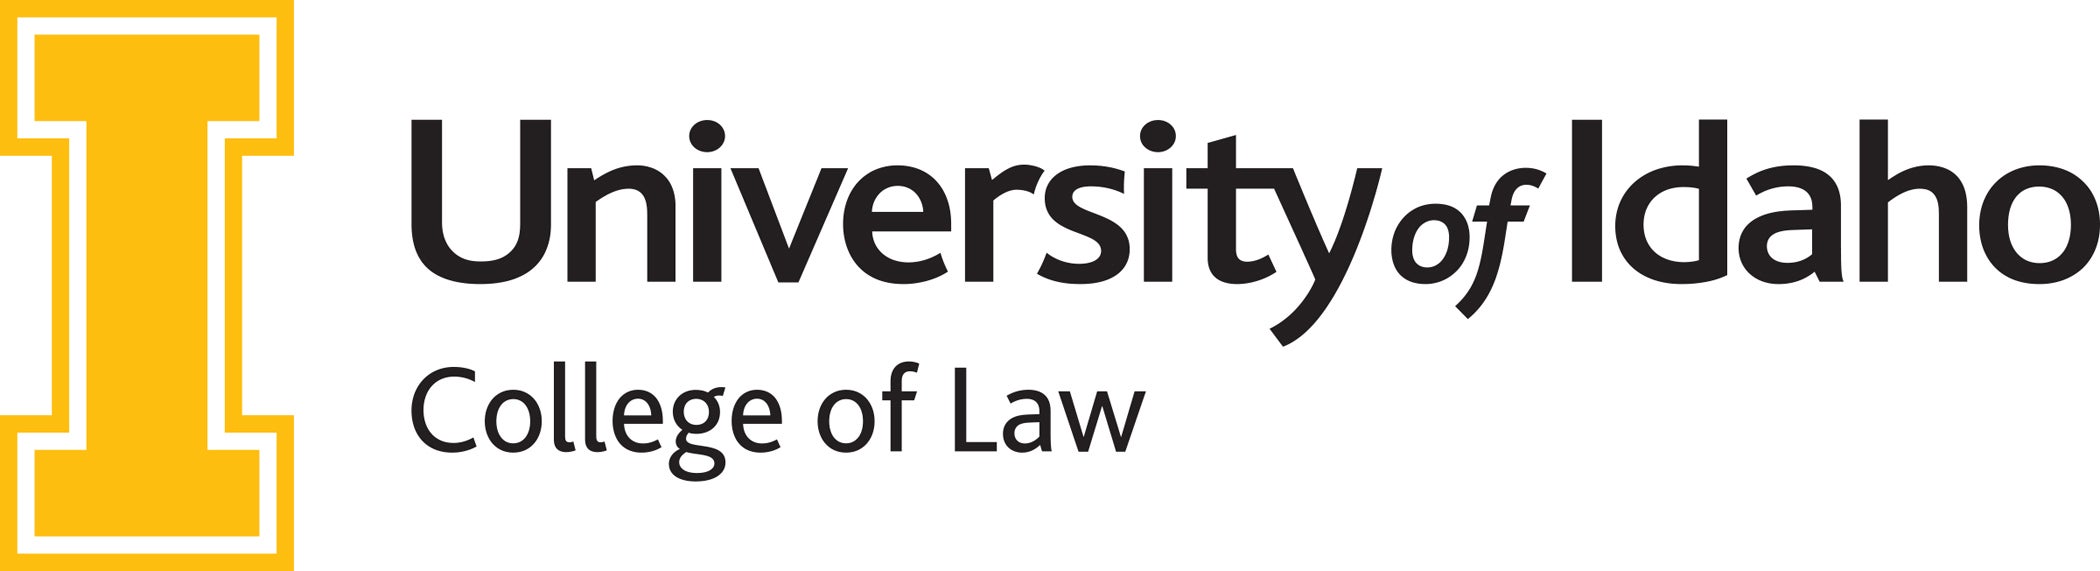 U of I college of law logo